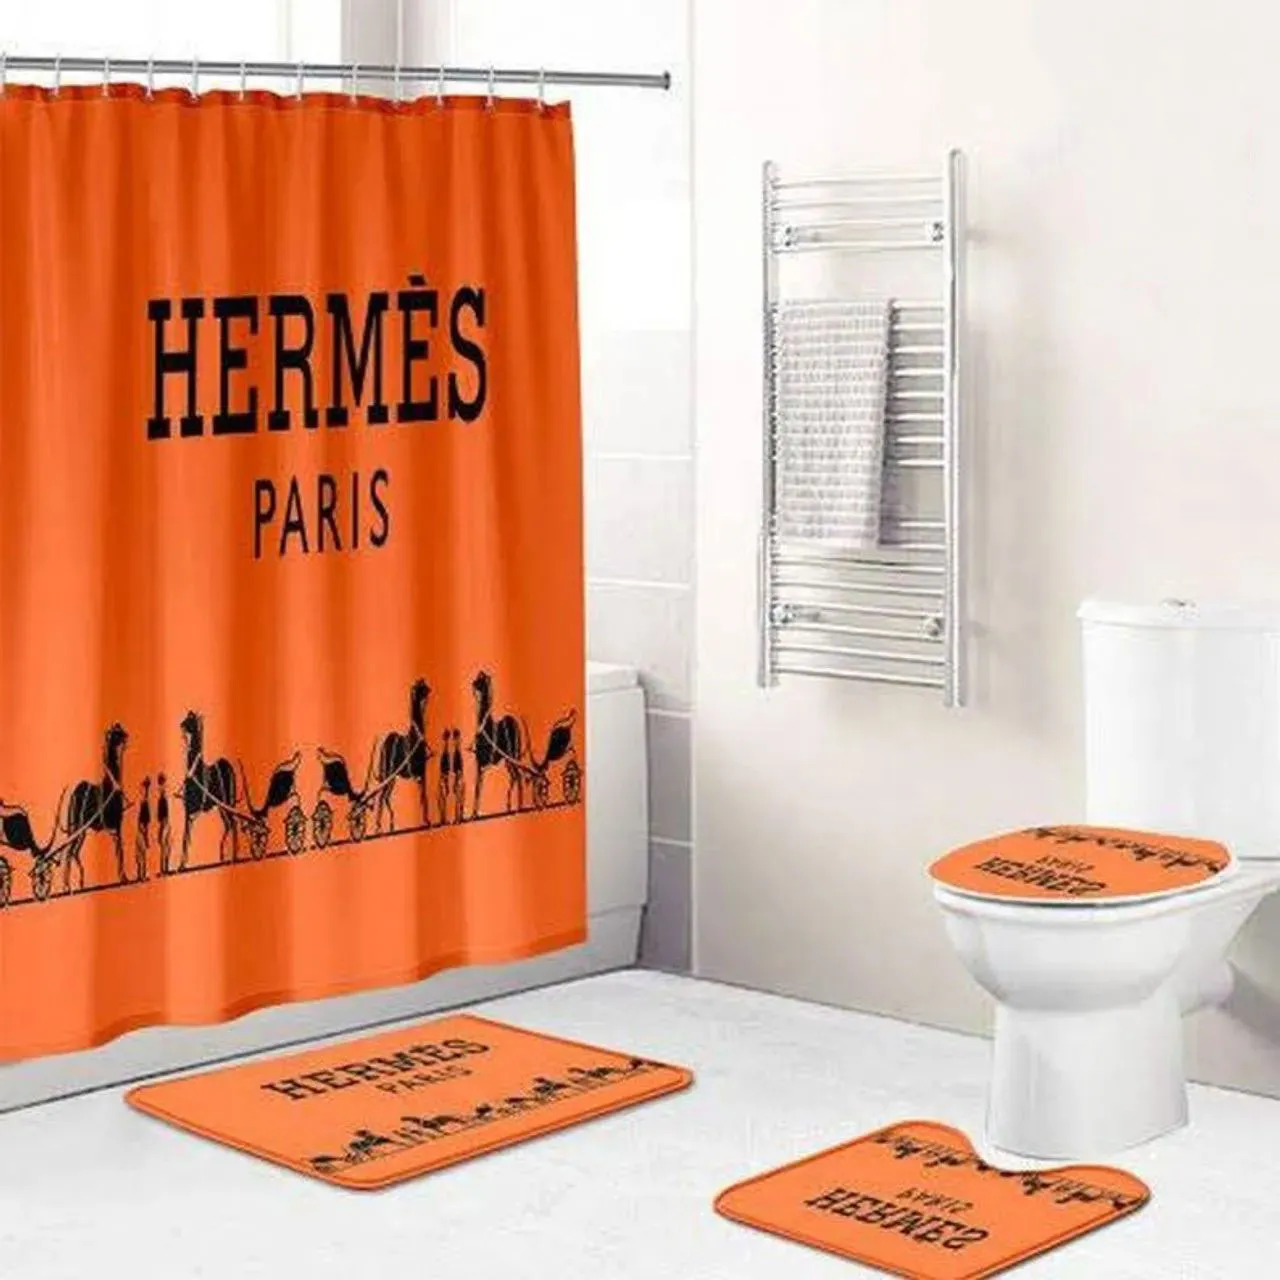 Hermes Paris Orange Bathroom Set Hypebeast Luxury Fashion Brand Bath Mat Home Decor